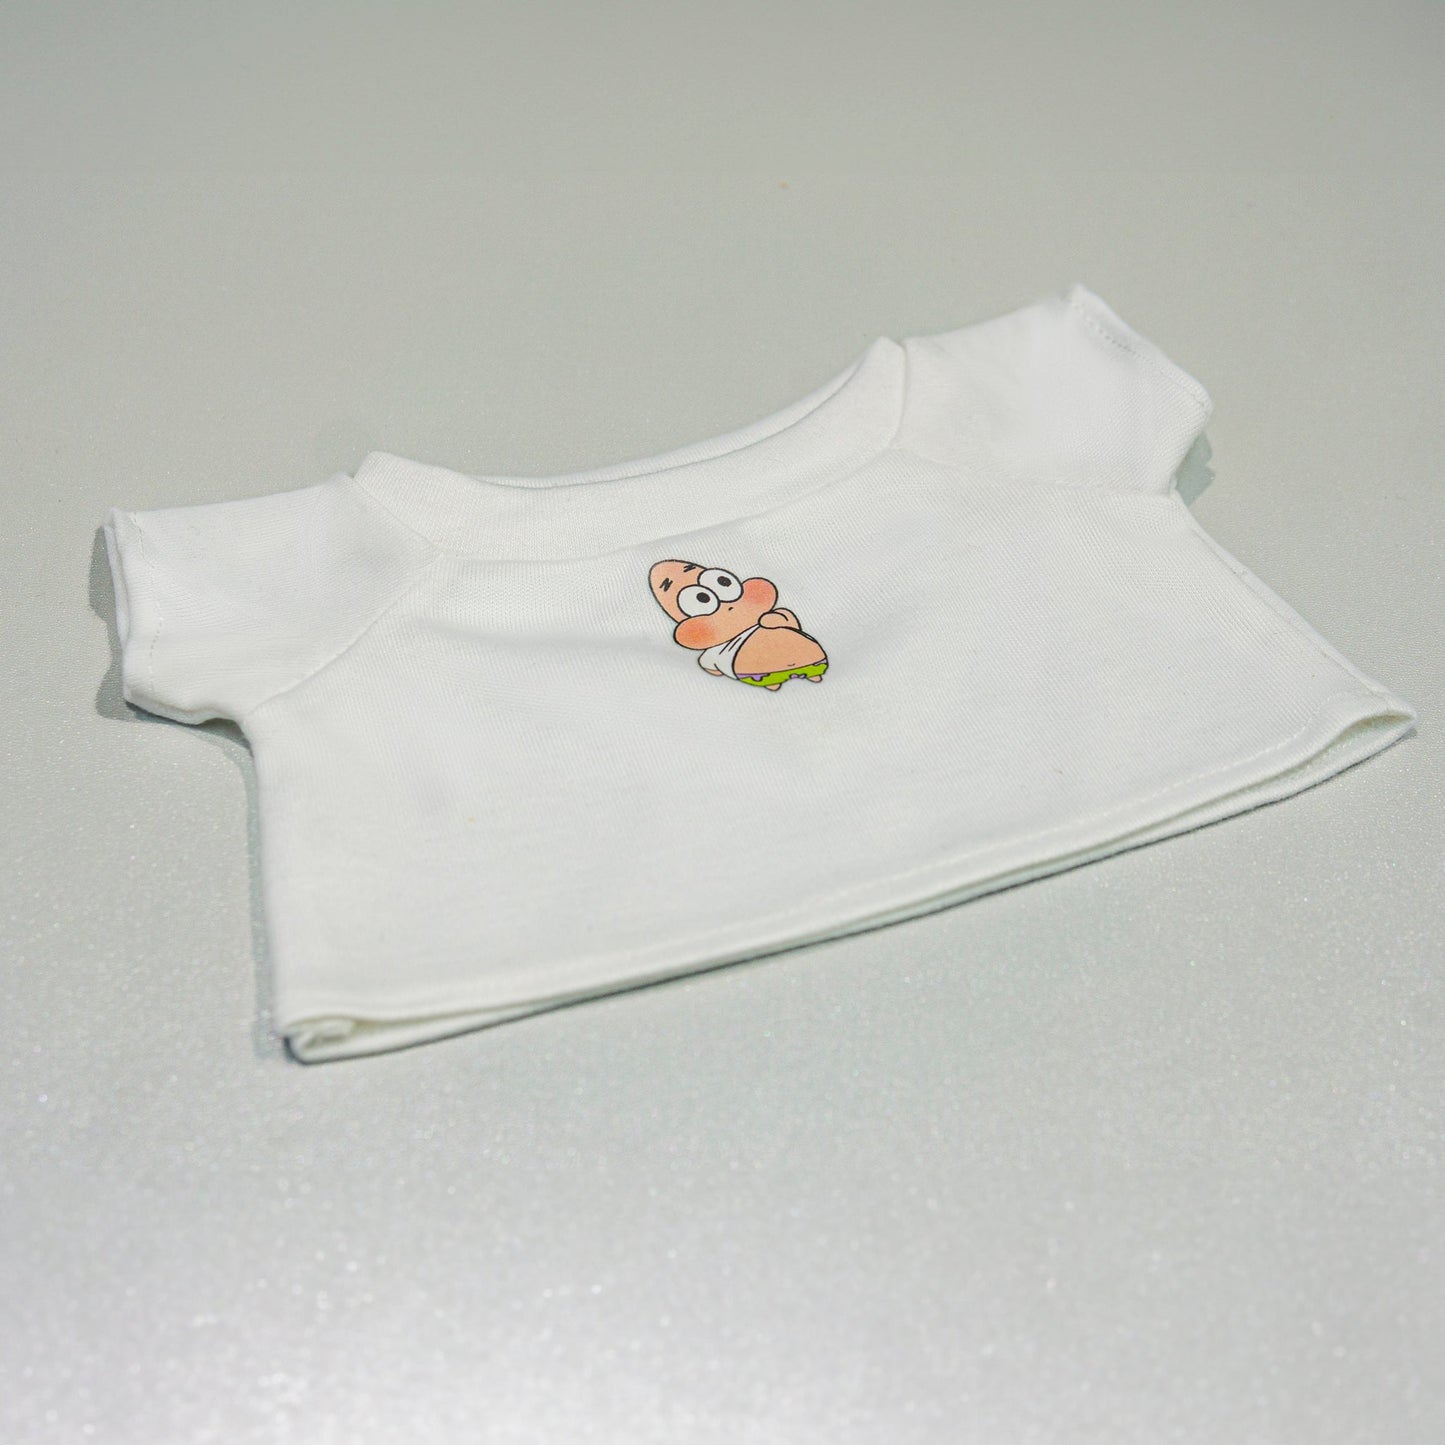 Puro Tiger Shark Plush Summer Short Sleeve Shirts 20582:359779